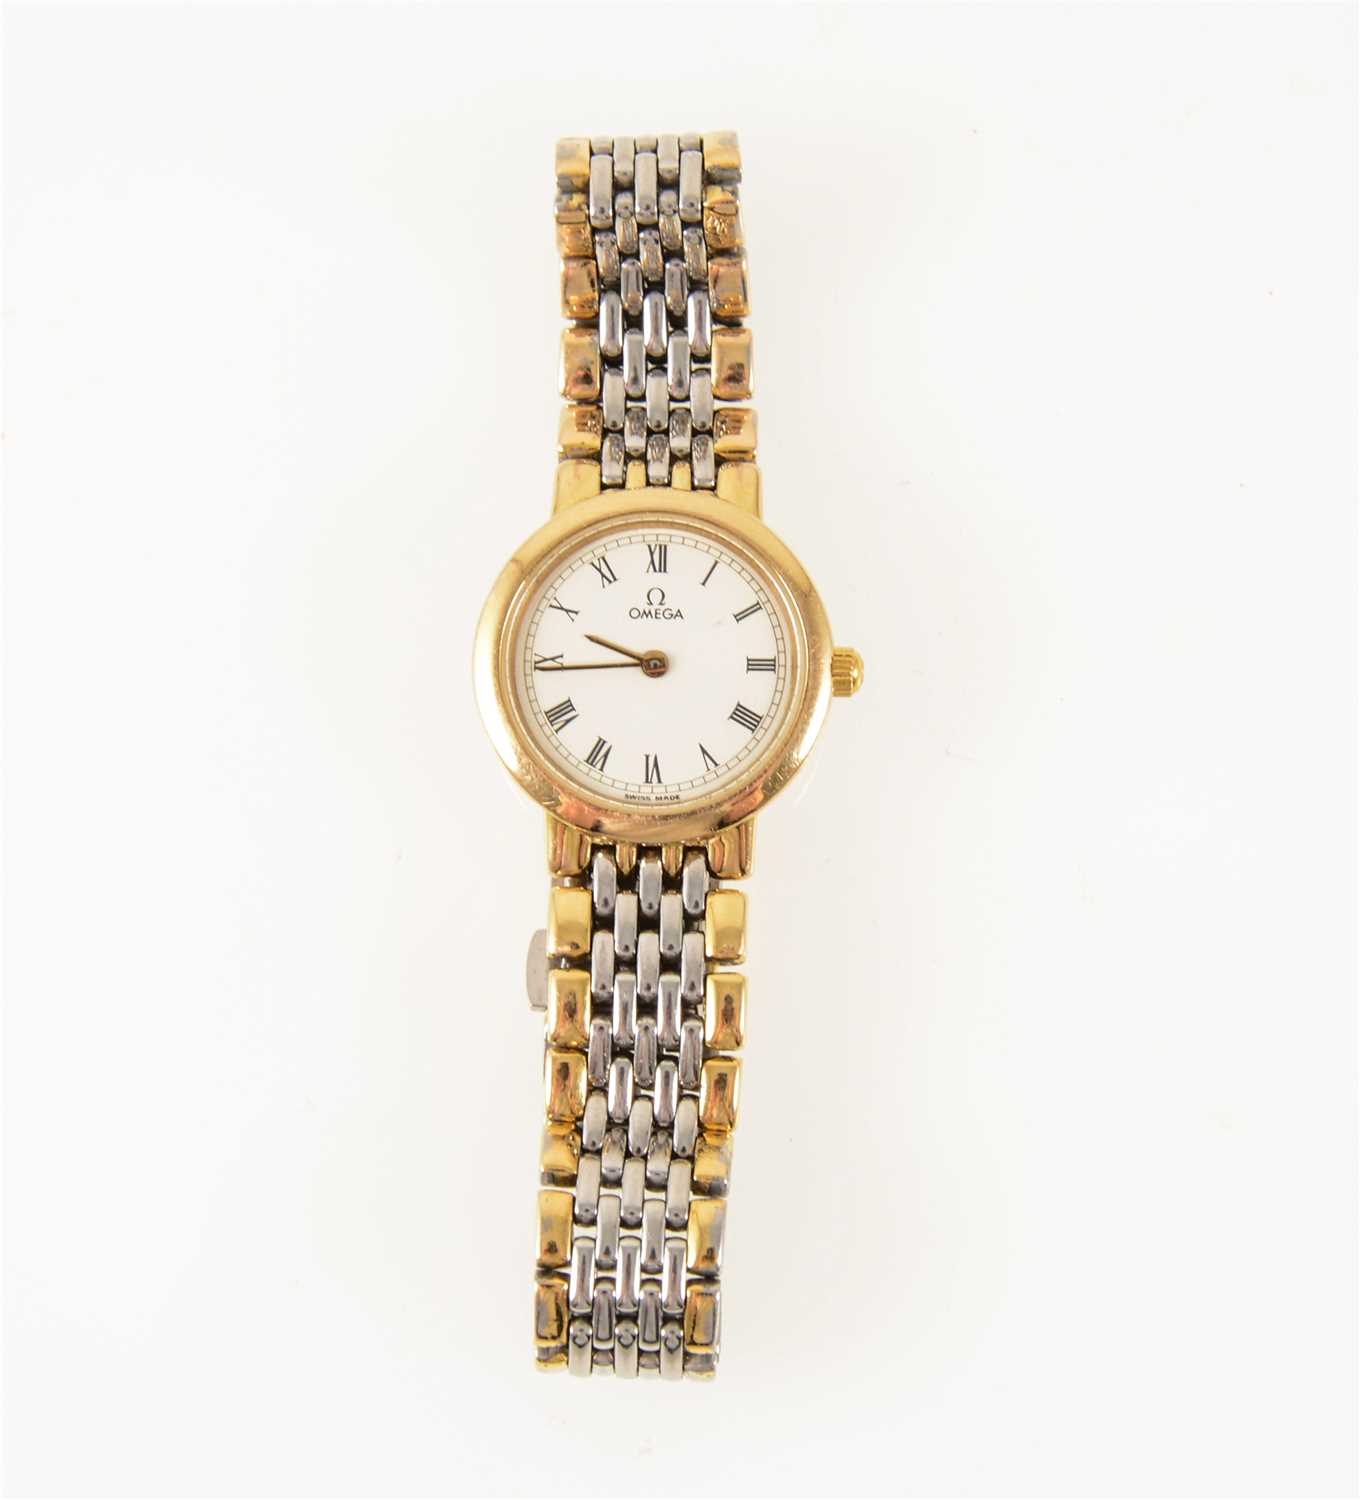 Lot 234 - Omega - a lady's wrist watch